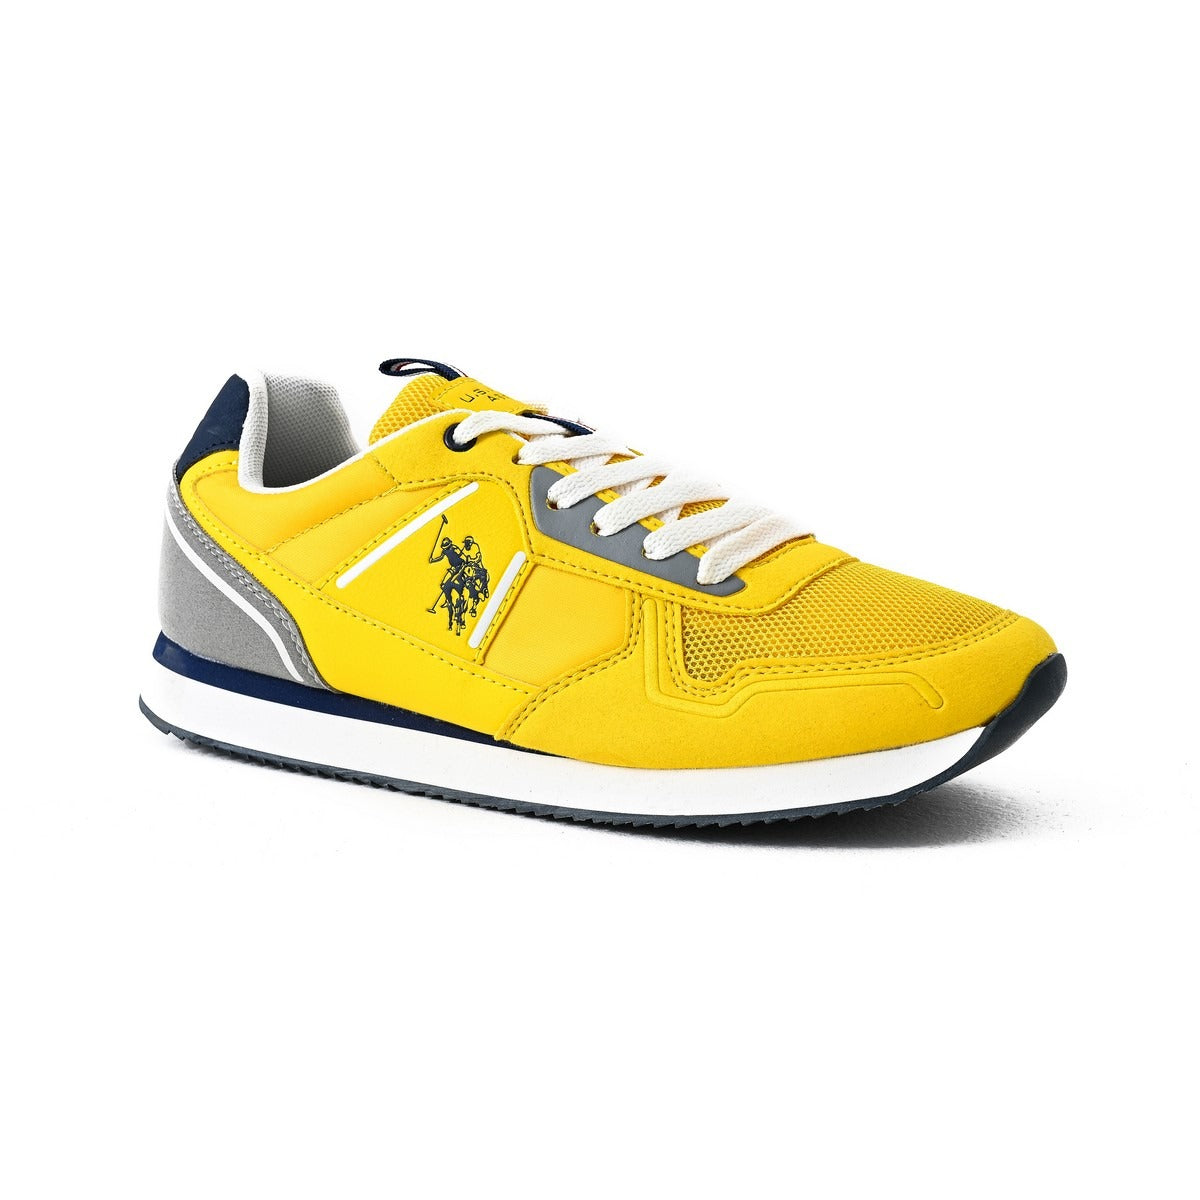 U.S. Polo Assn. Men’s Sneakers Yellow #P332